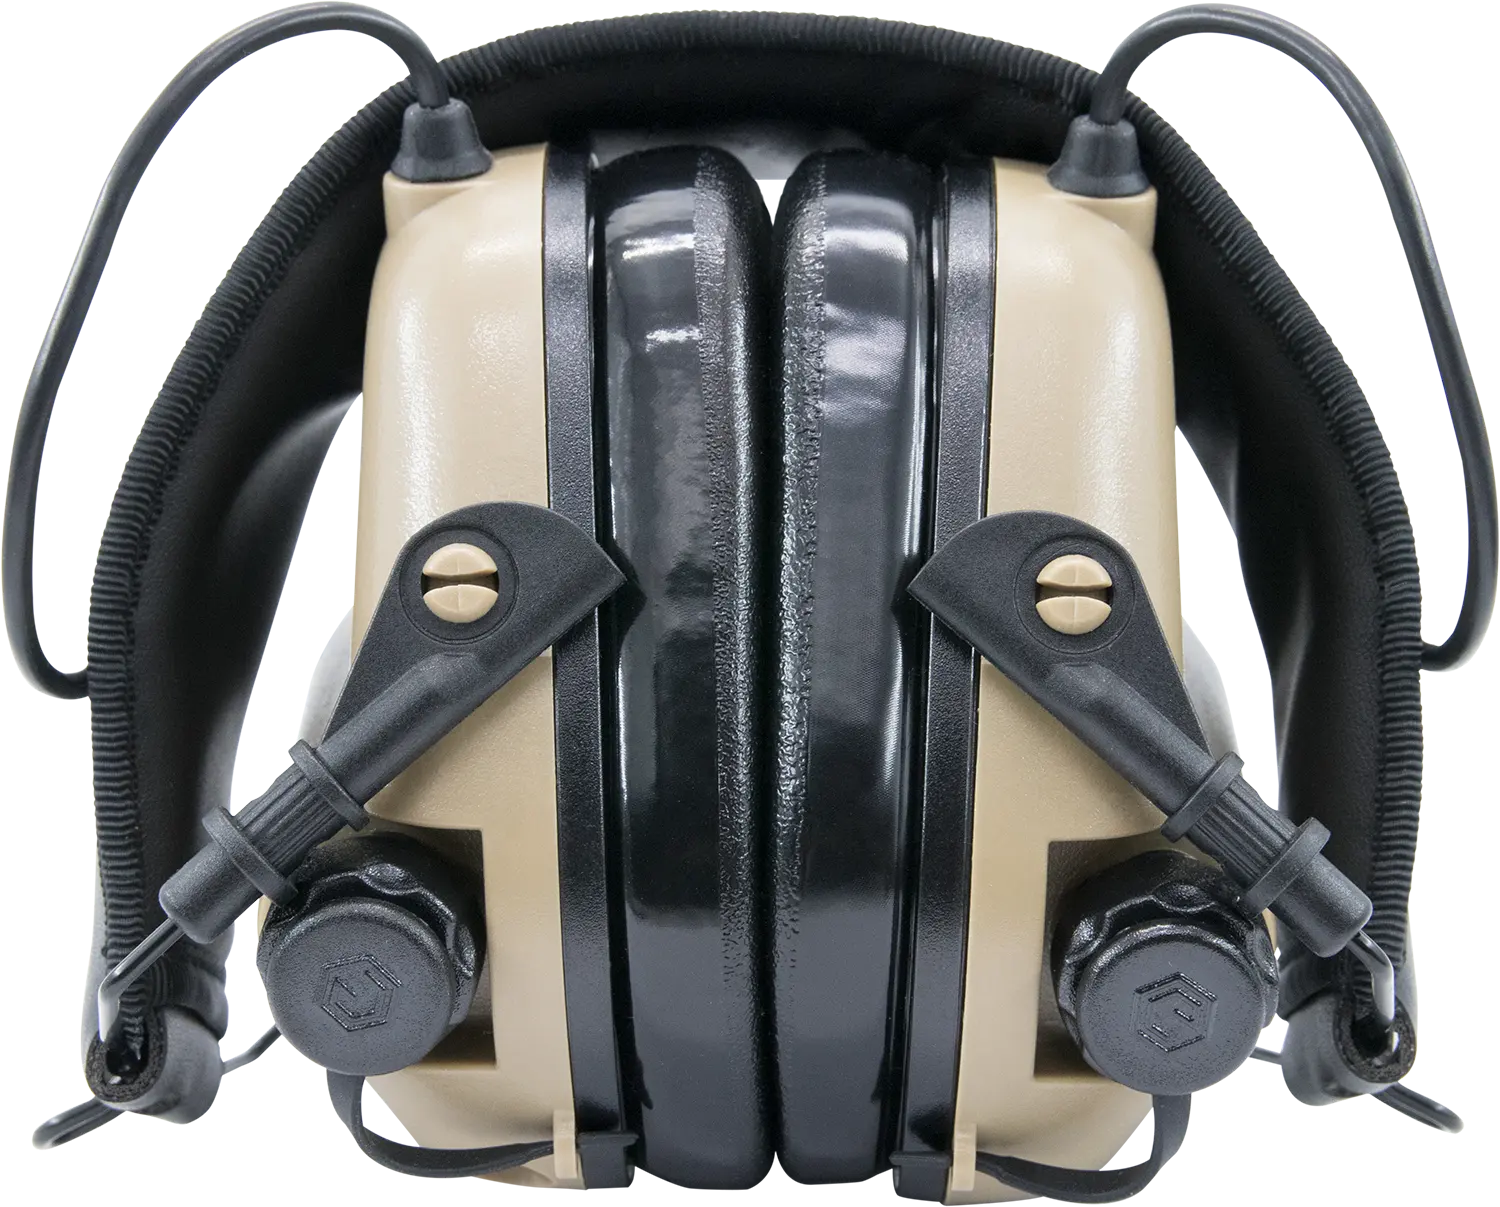 EARMOR OPSMEN M31 Elektronische Geräusch unterdrückung Ohren schützer Advance Design Gehörschutz Sicherheit Elektronischer Kopfhörer